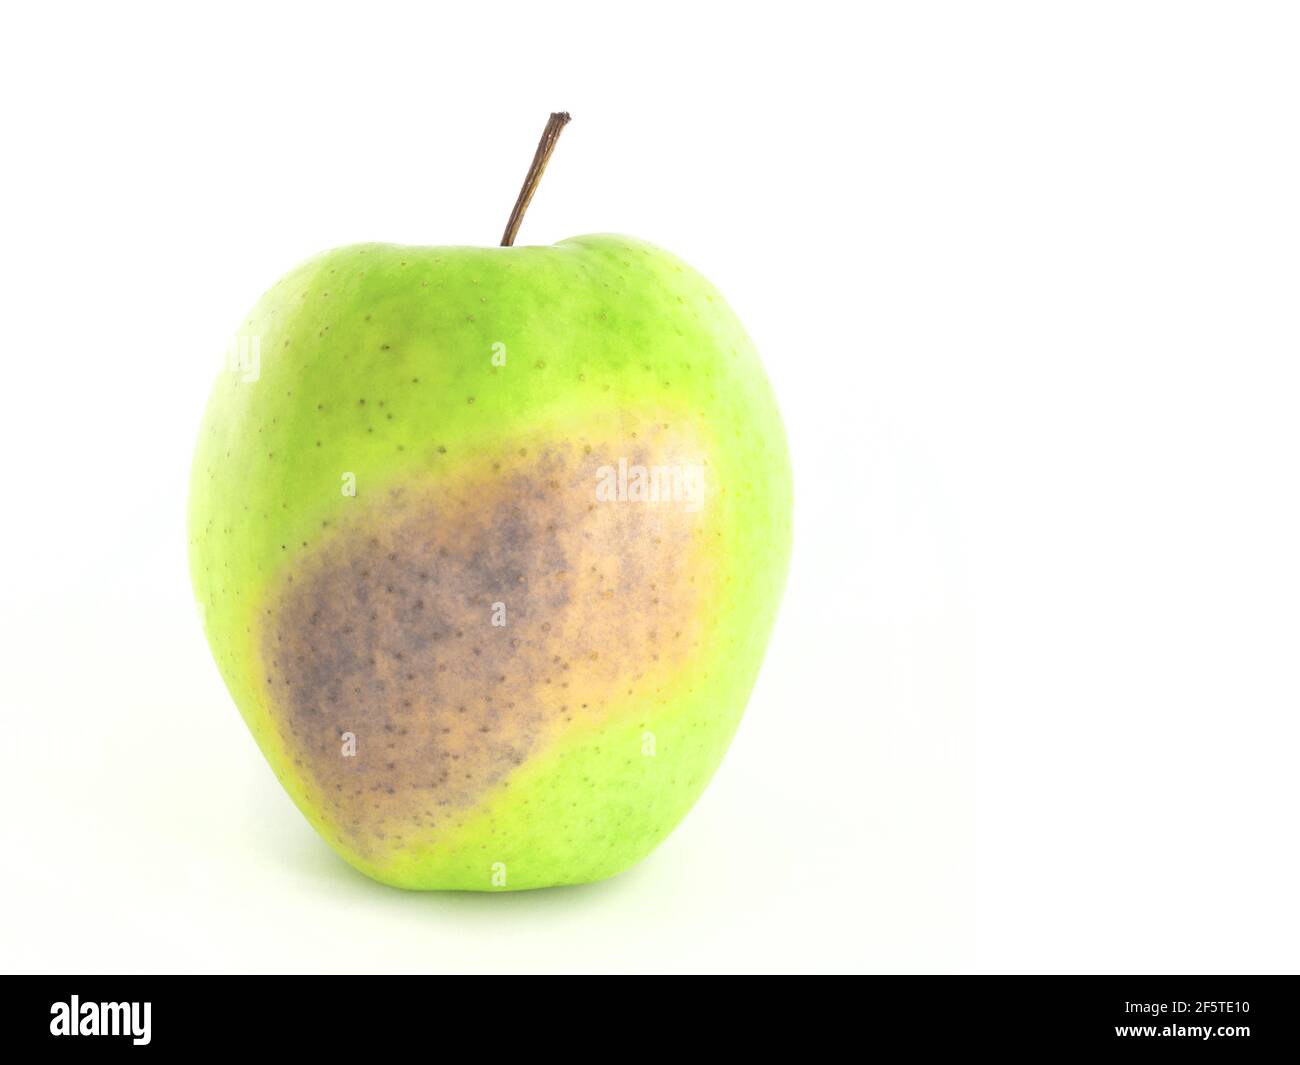 Premium PSD  Rotten green apple